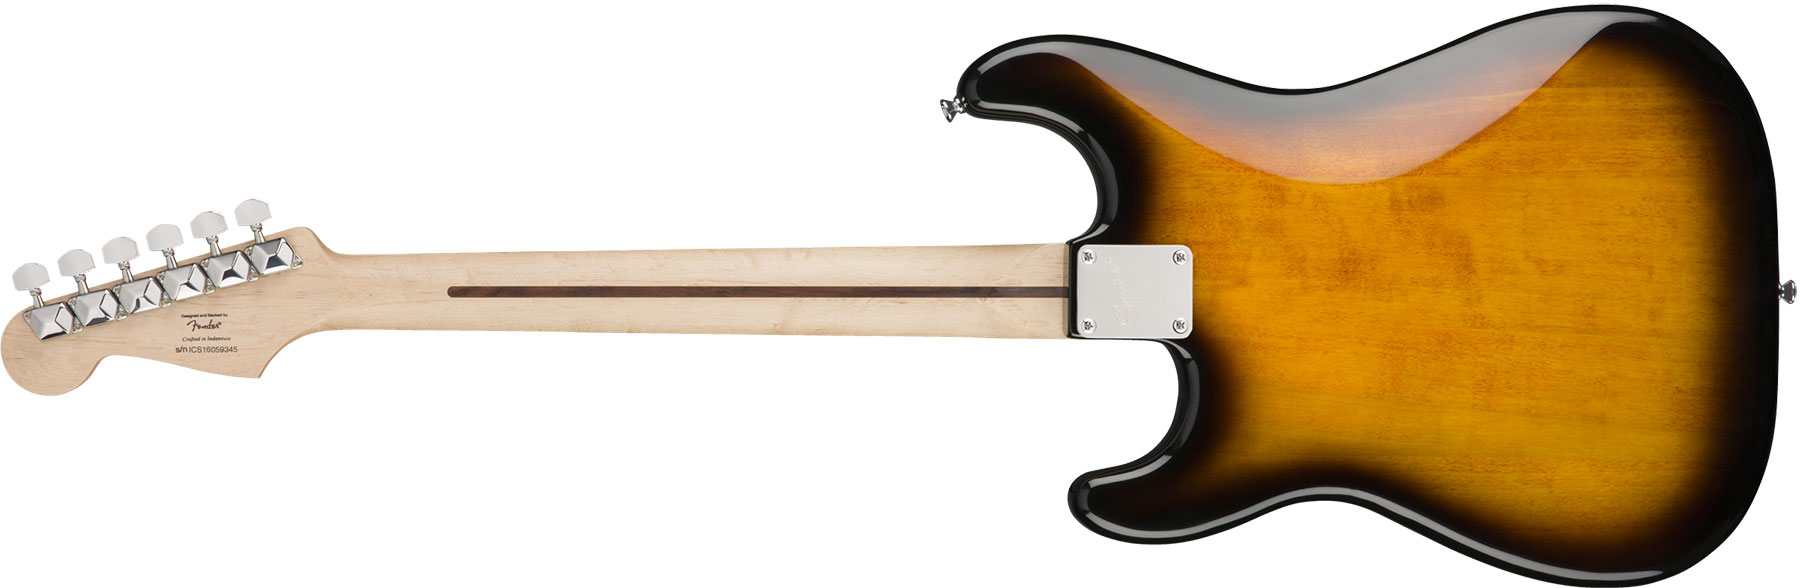 Squier Bullet Stratocaster Ht Sss Rw - Brown Sunburst - Guitarra eléctrica con forma de str. - Variation 1